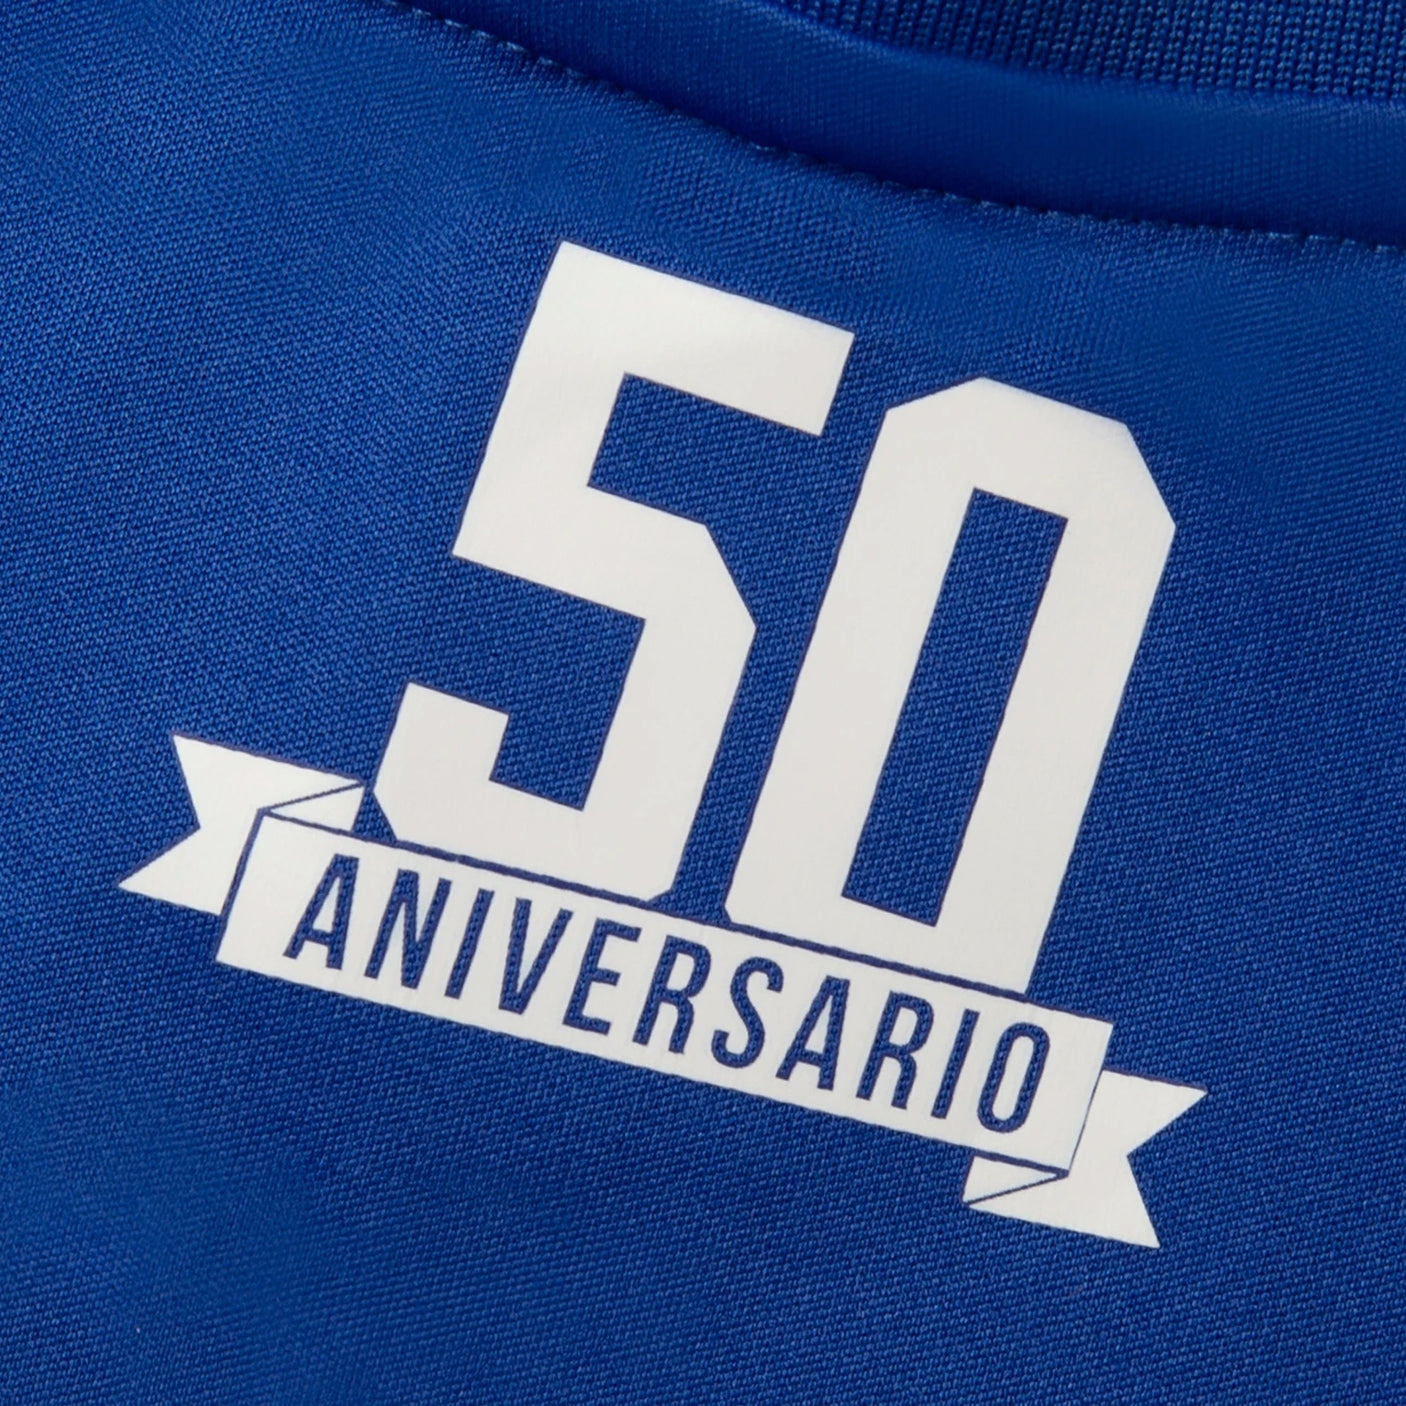 Umbrol El Salvador 50th Anniversary Jersey Detail